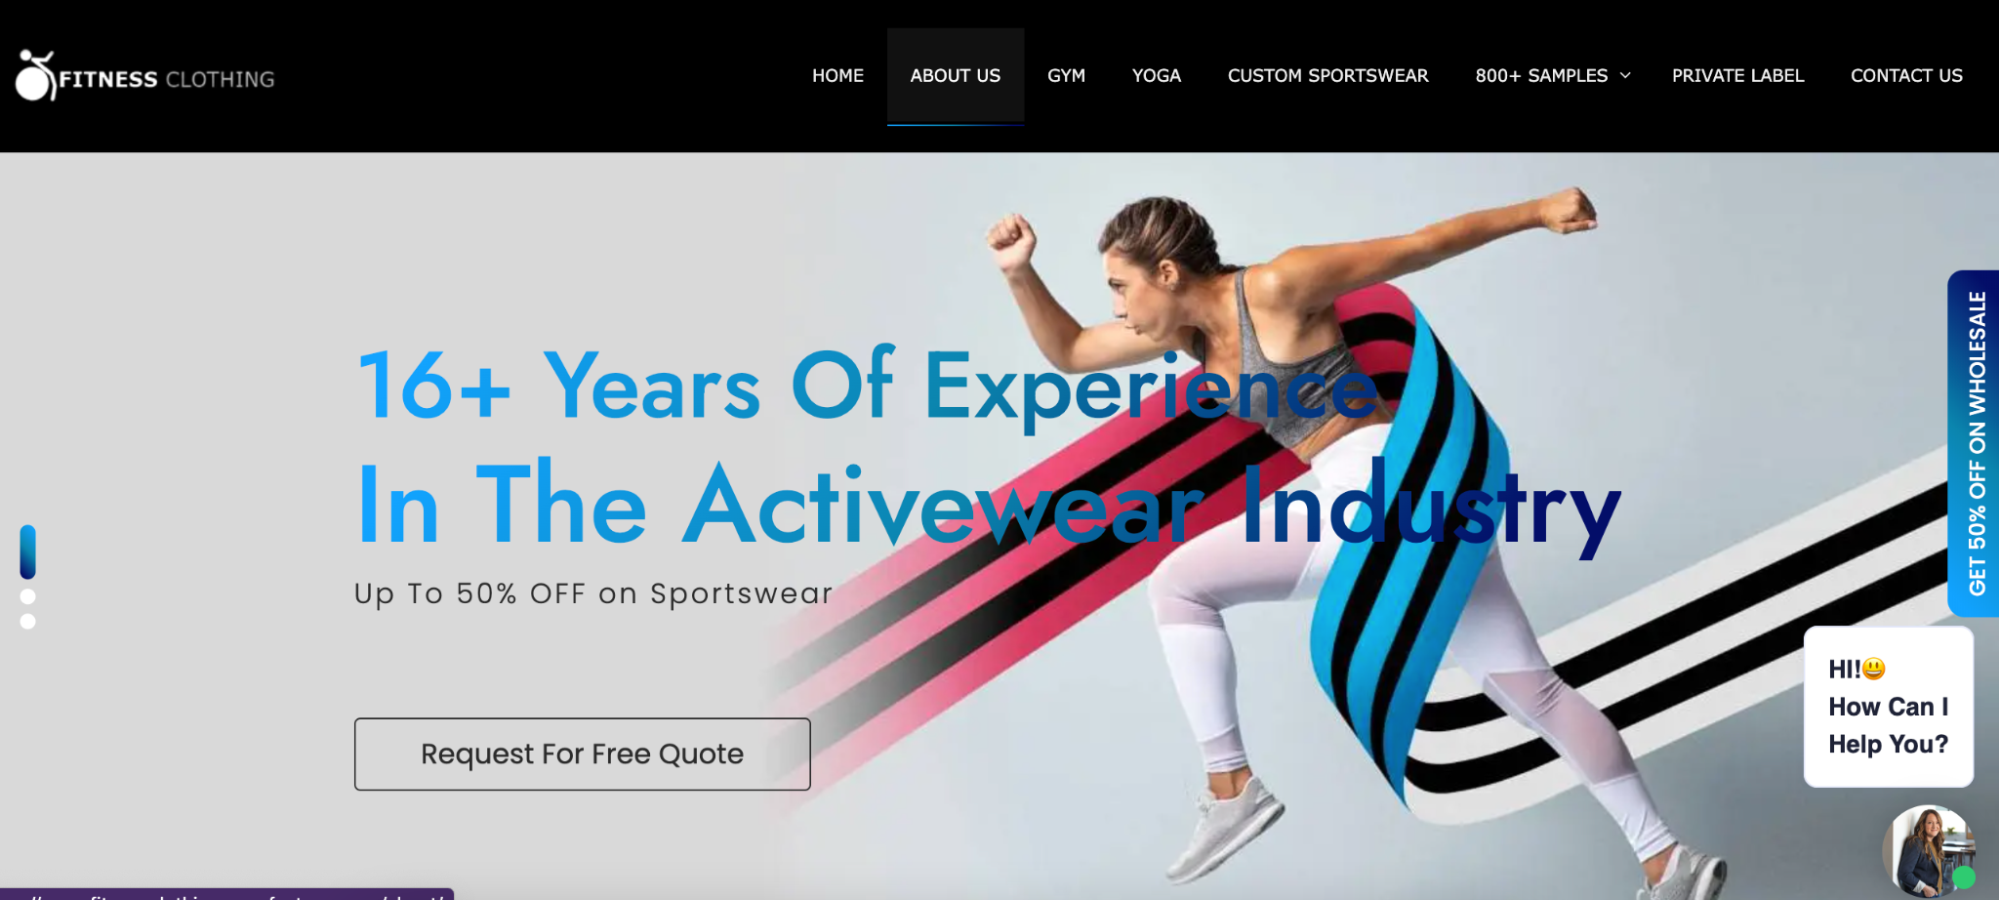 Screenshot of Fitness Clothing website homepage